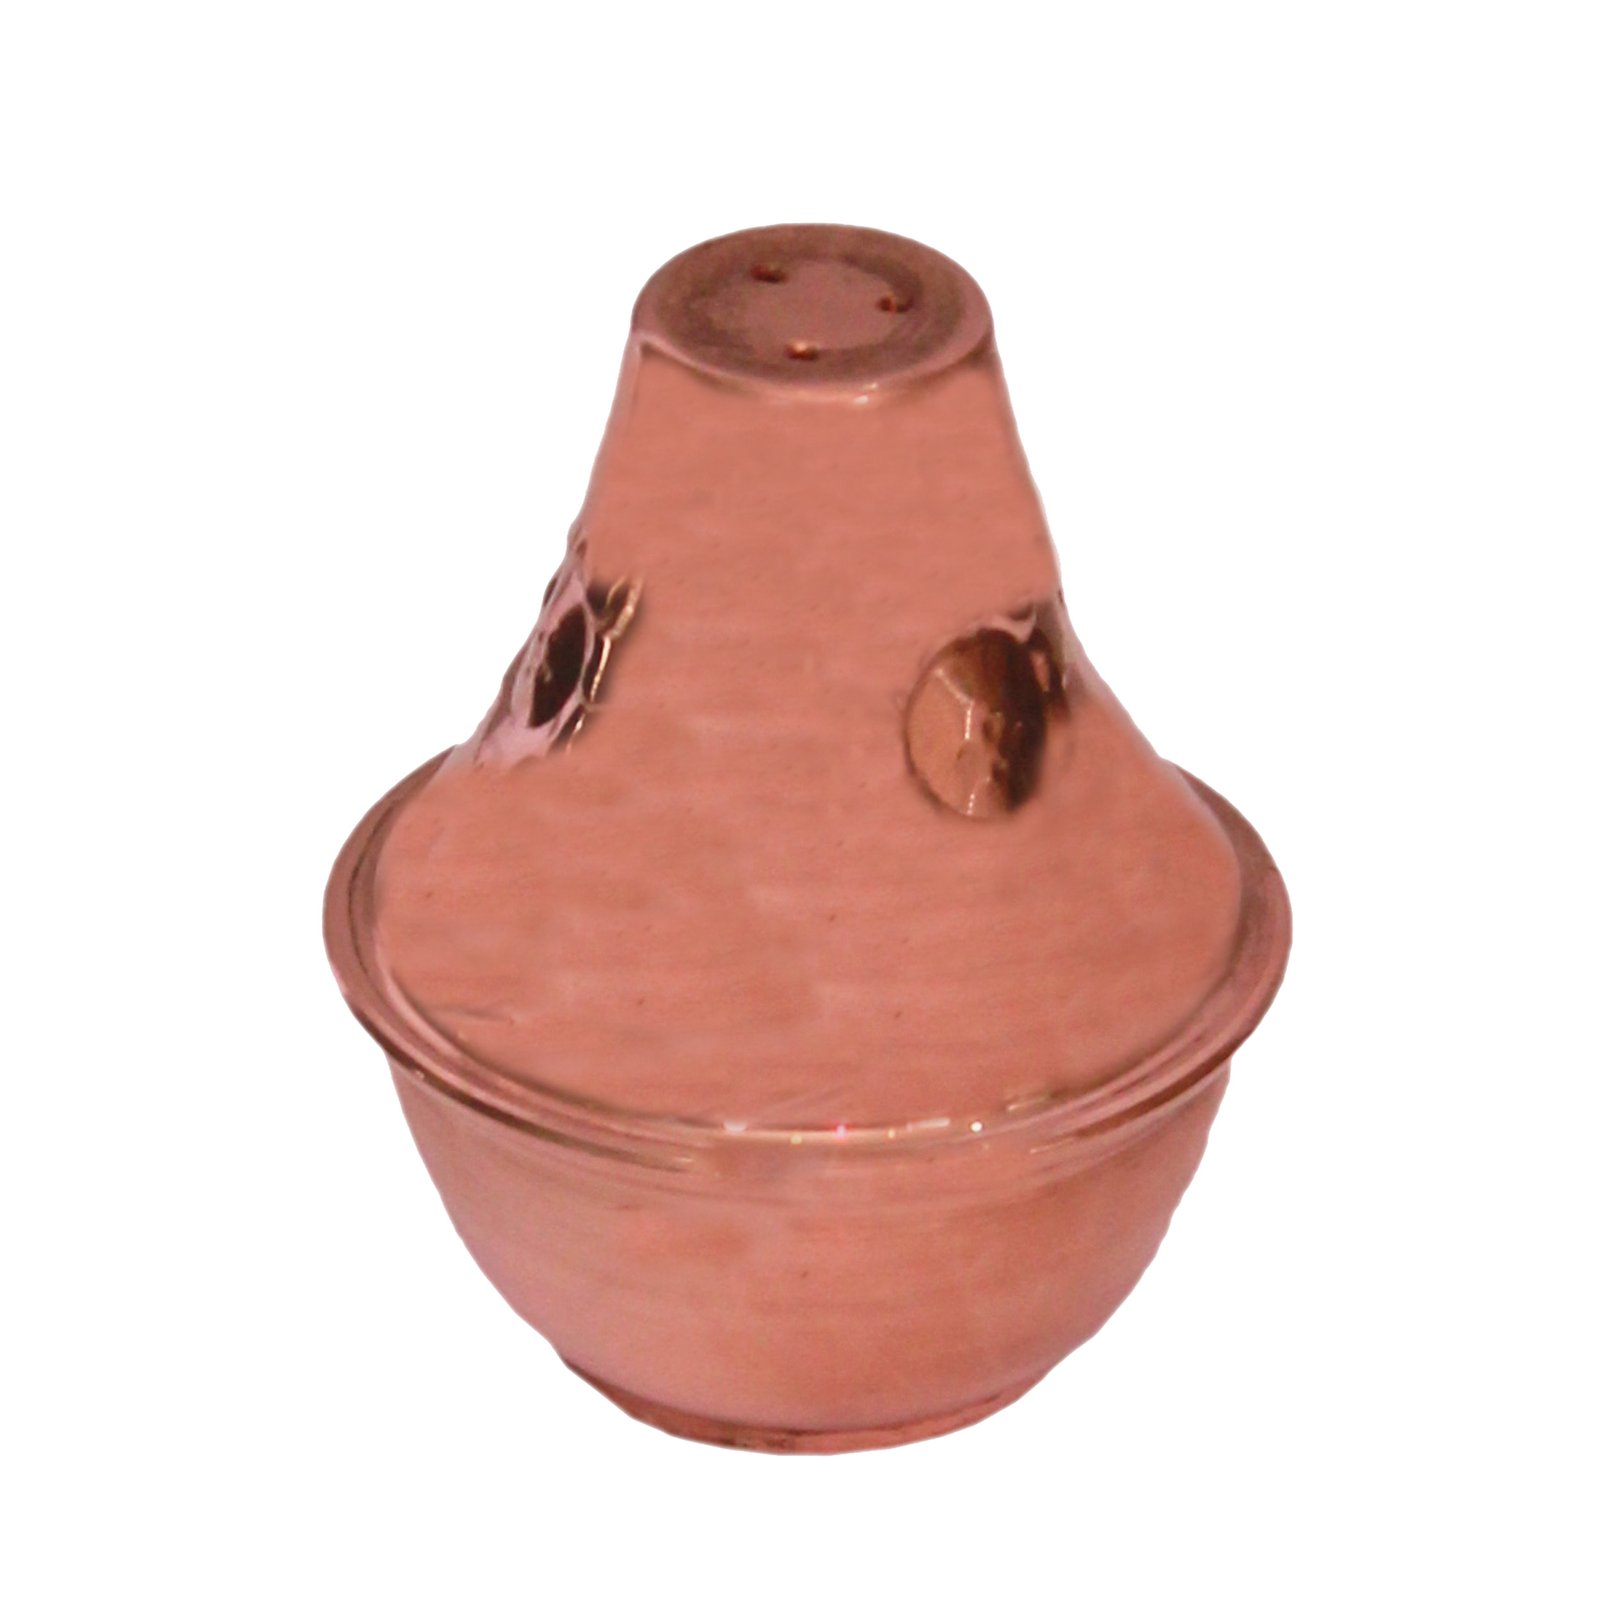 Handicraft Copper Spice container code 5852,buy copper stuff,buy copper handmades